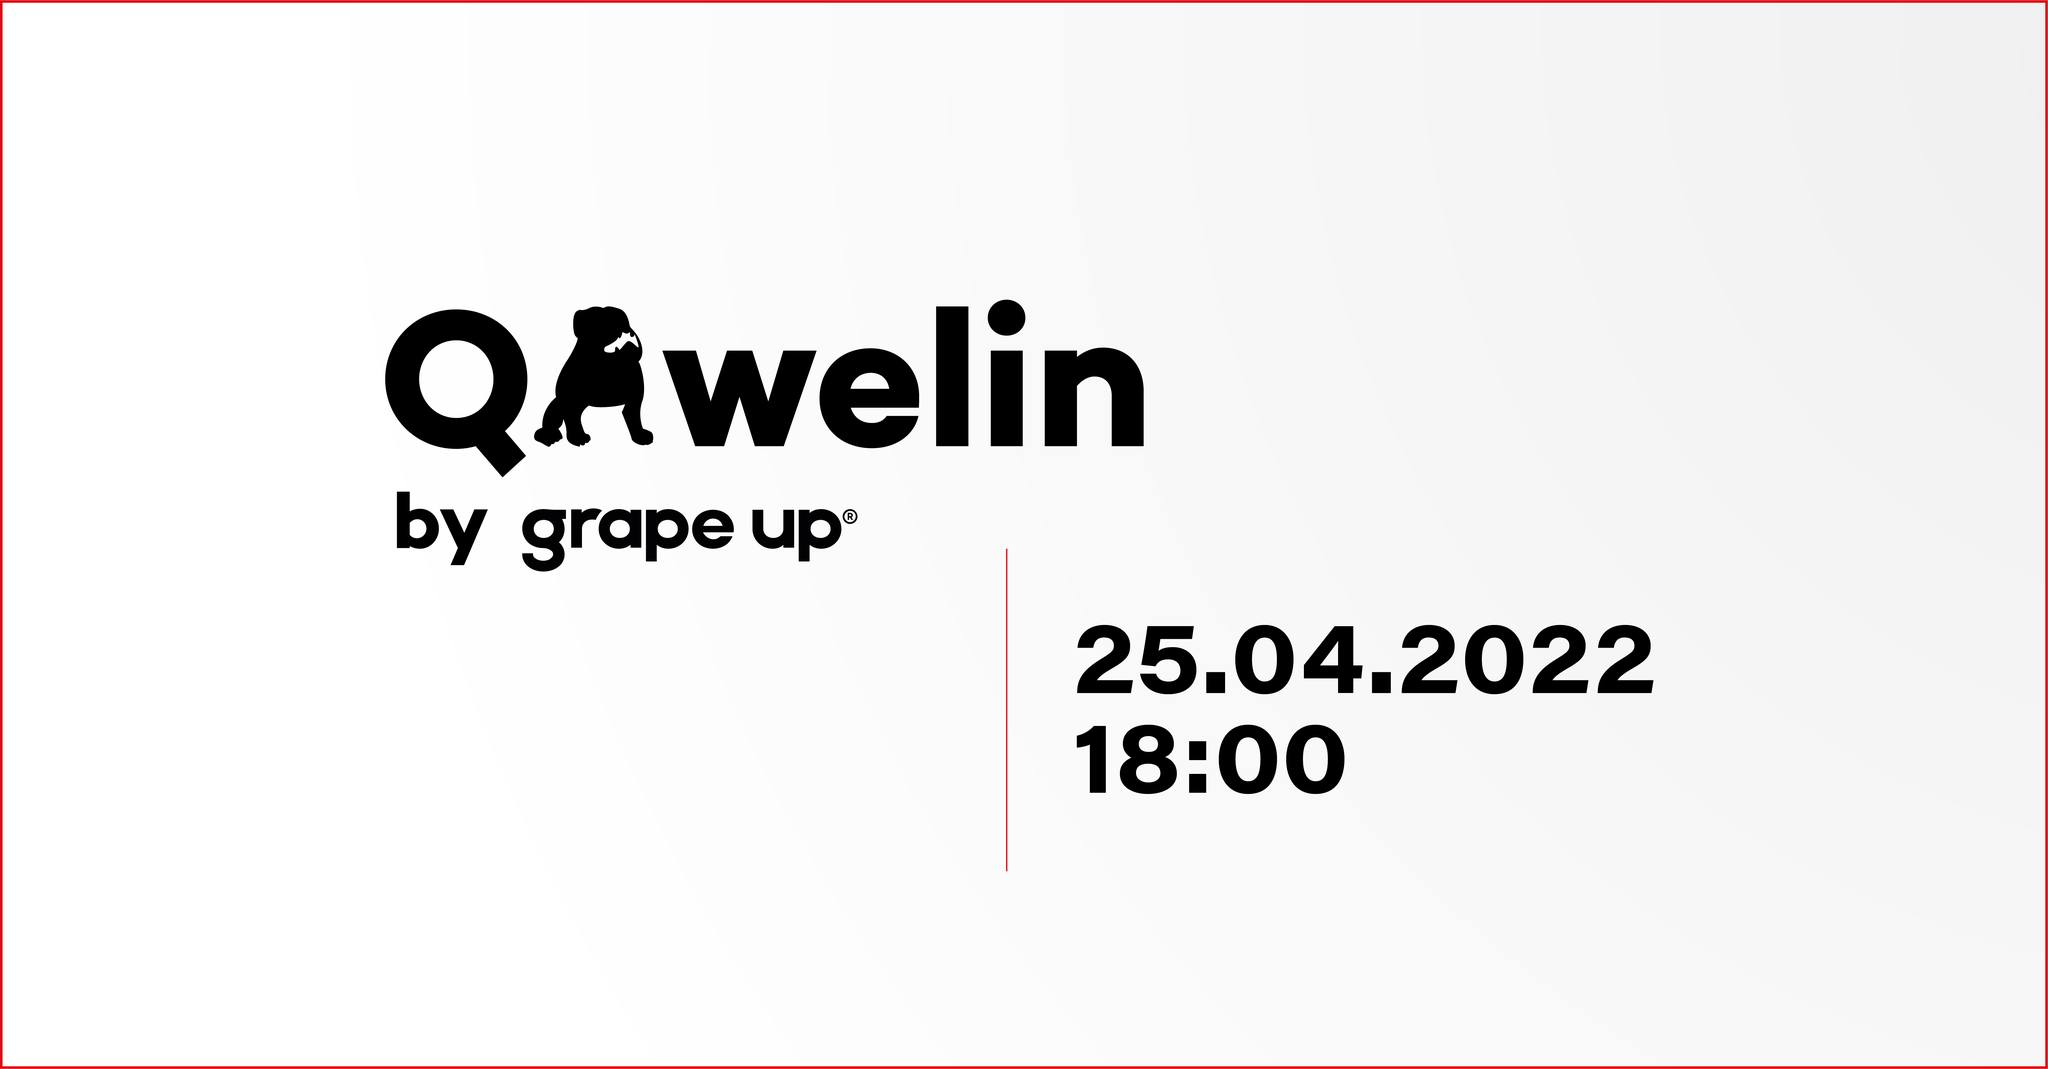 qawelin-powered-by-grape-up-1-fighting-api-and-ui-testing-with-karate-cechowa-kwiecien-2022